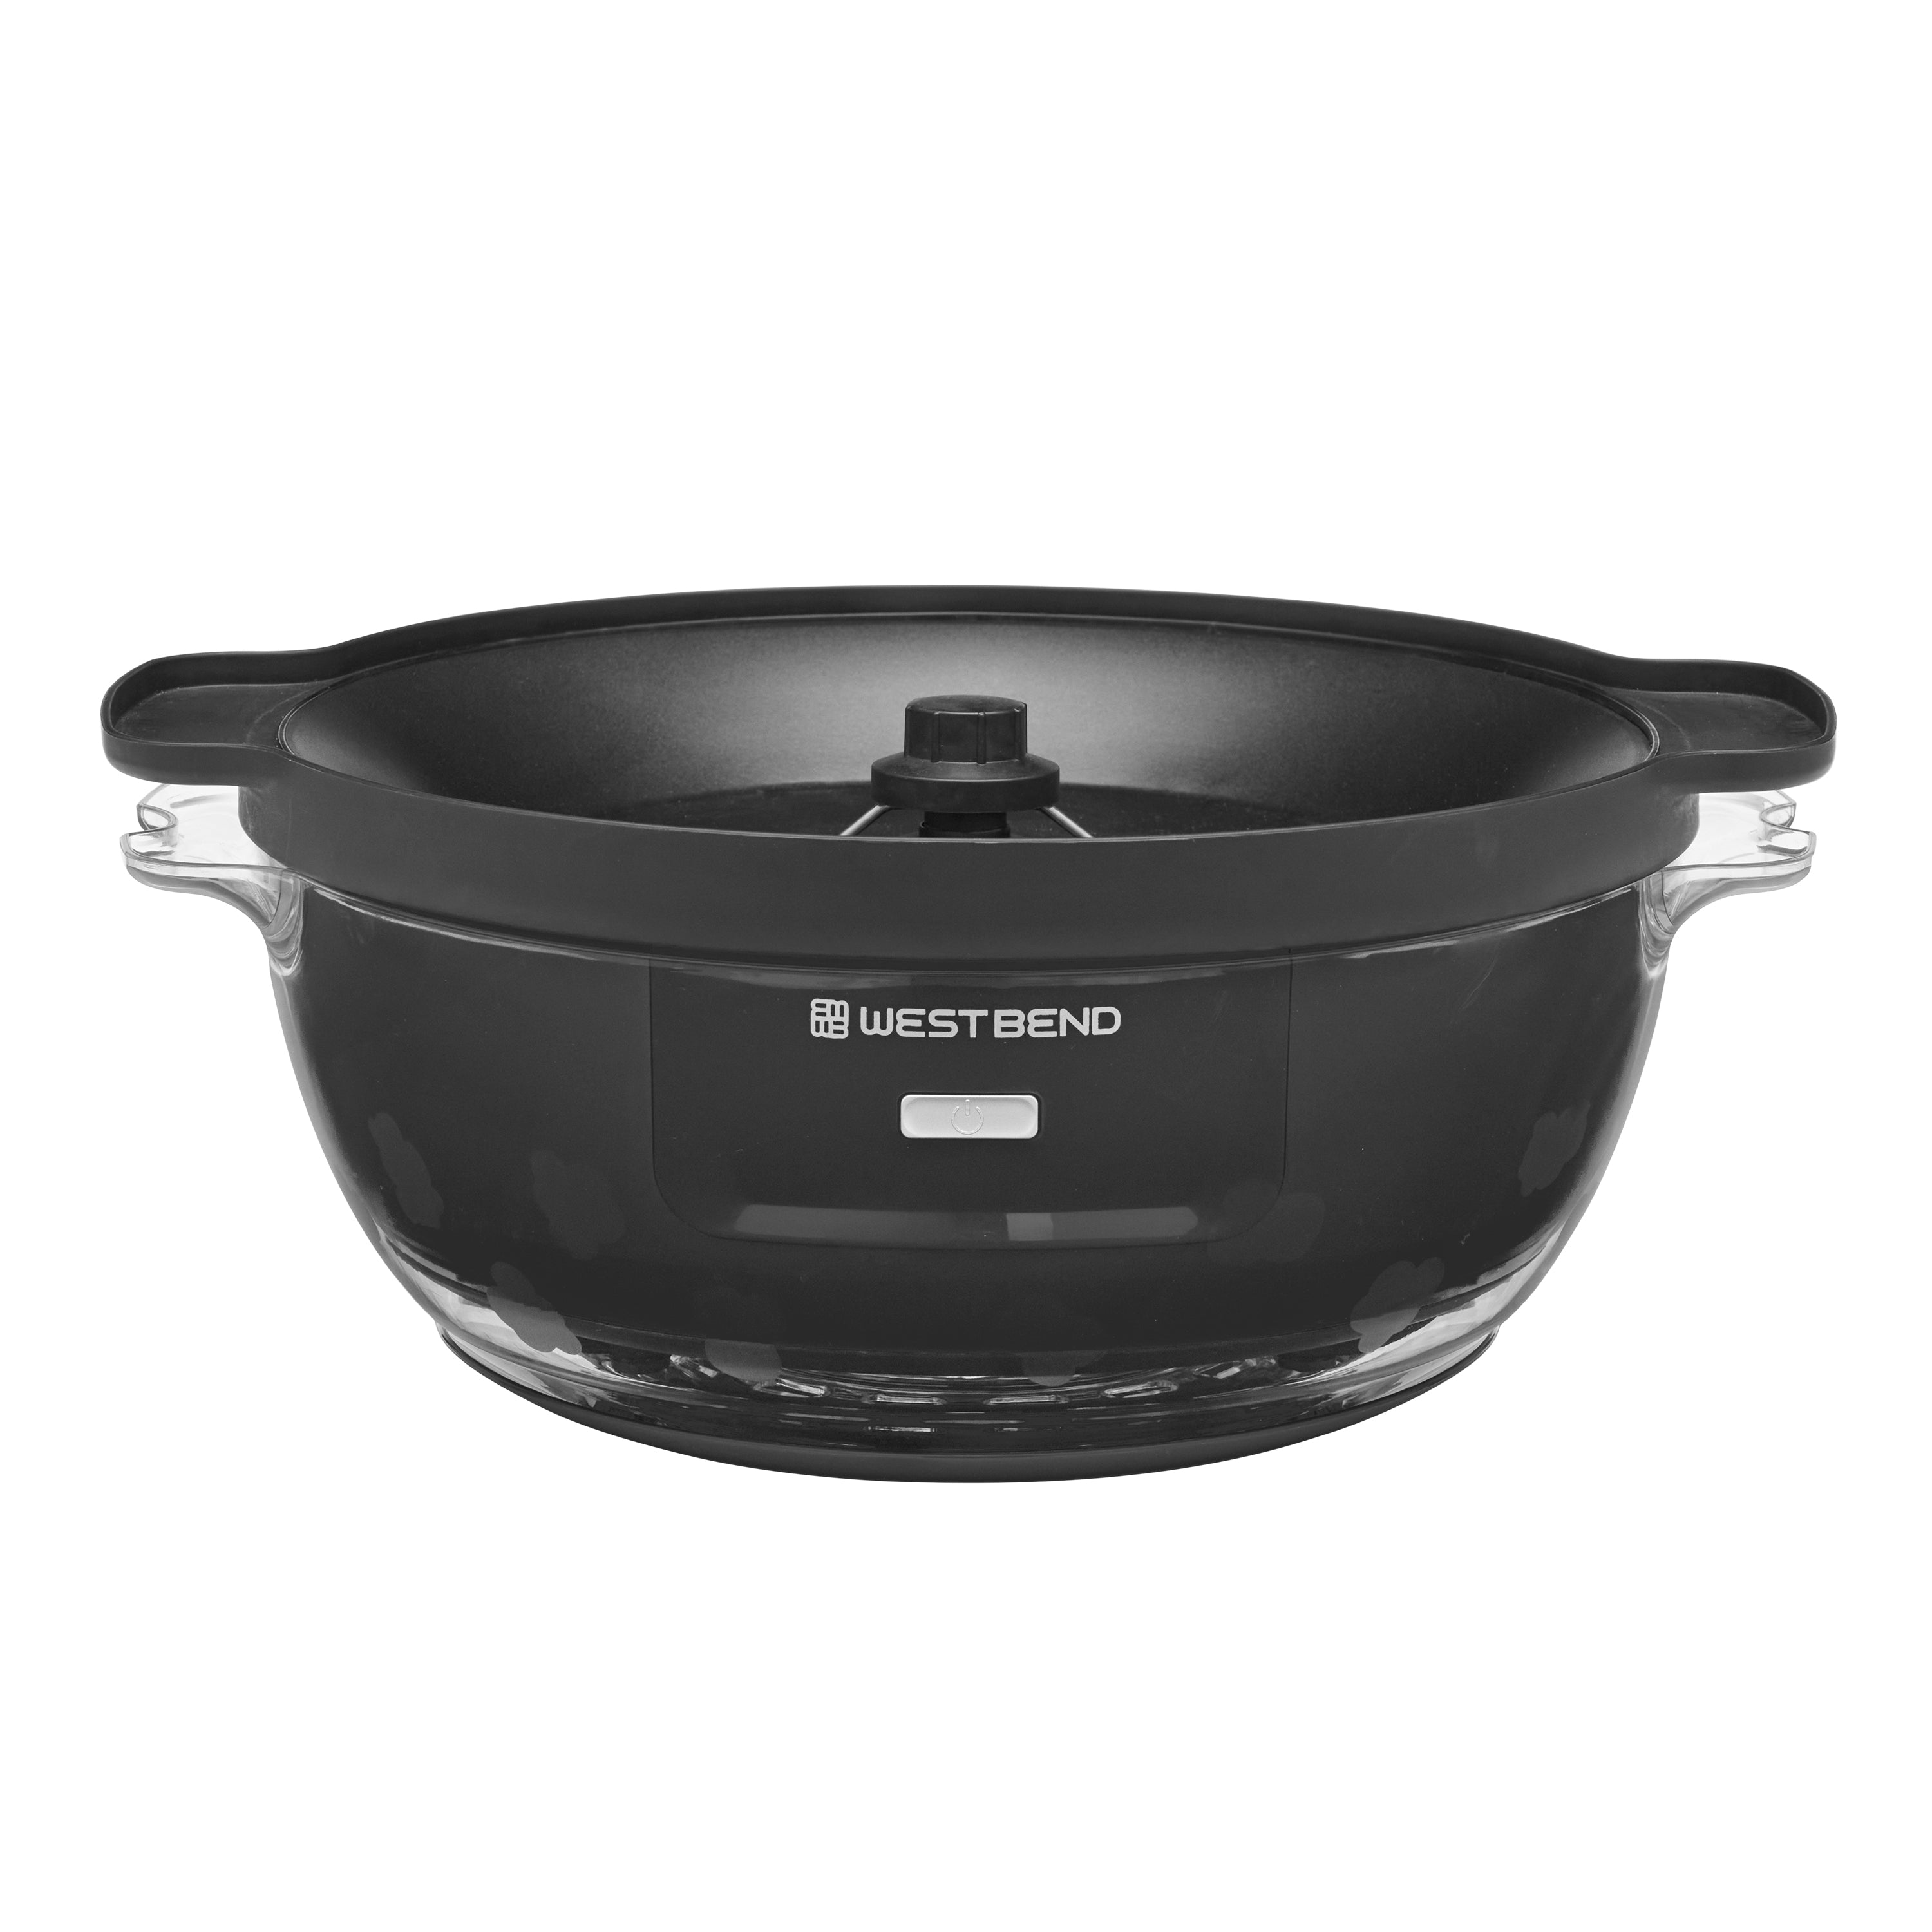 Crock-Pot Stir Automatic Stirring Slow Cooker, 6-Quart, Black